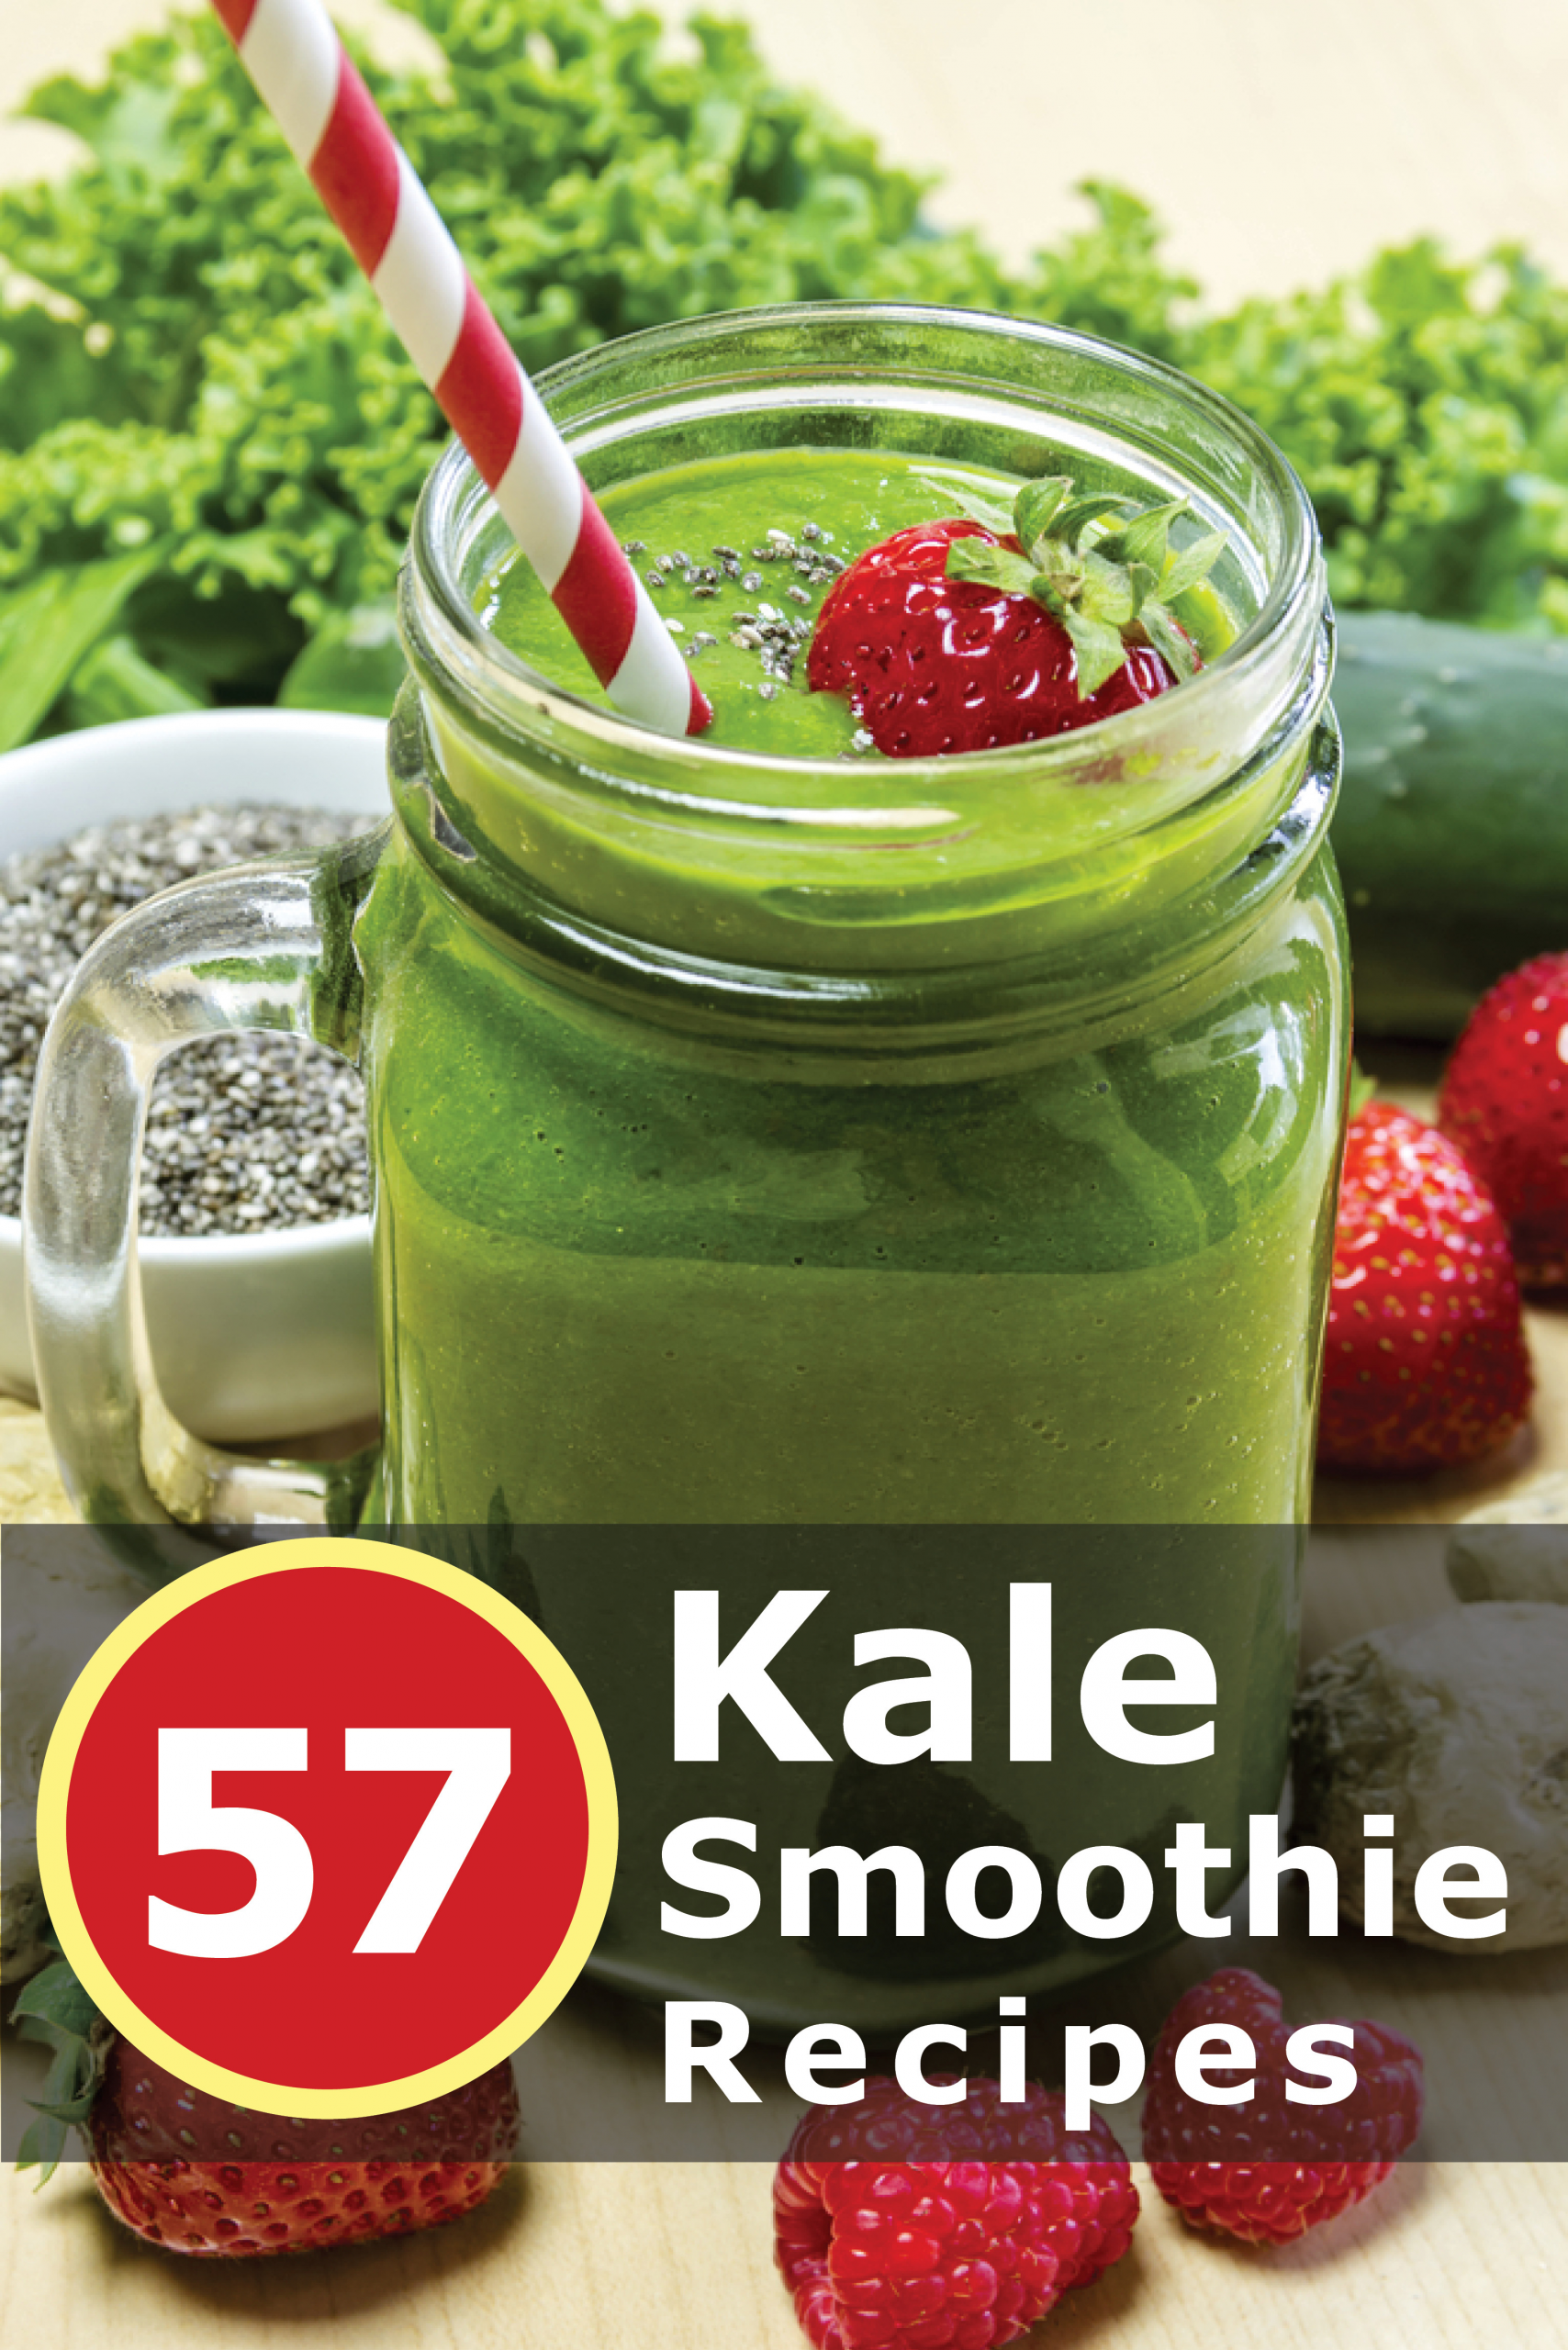 Kale Smoothie Recipes Healthy
 57 Amazing Vegan and Paleo Friendly Kale Smoothie Recipes